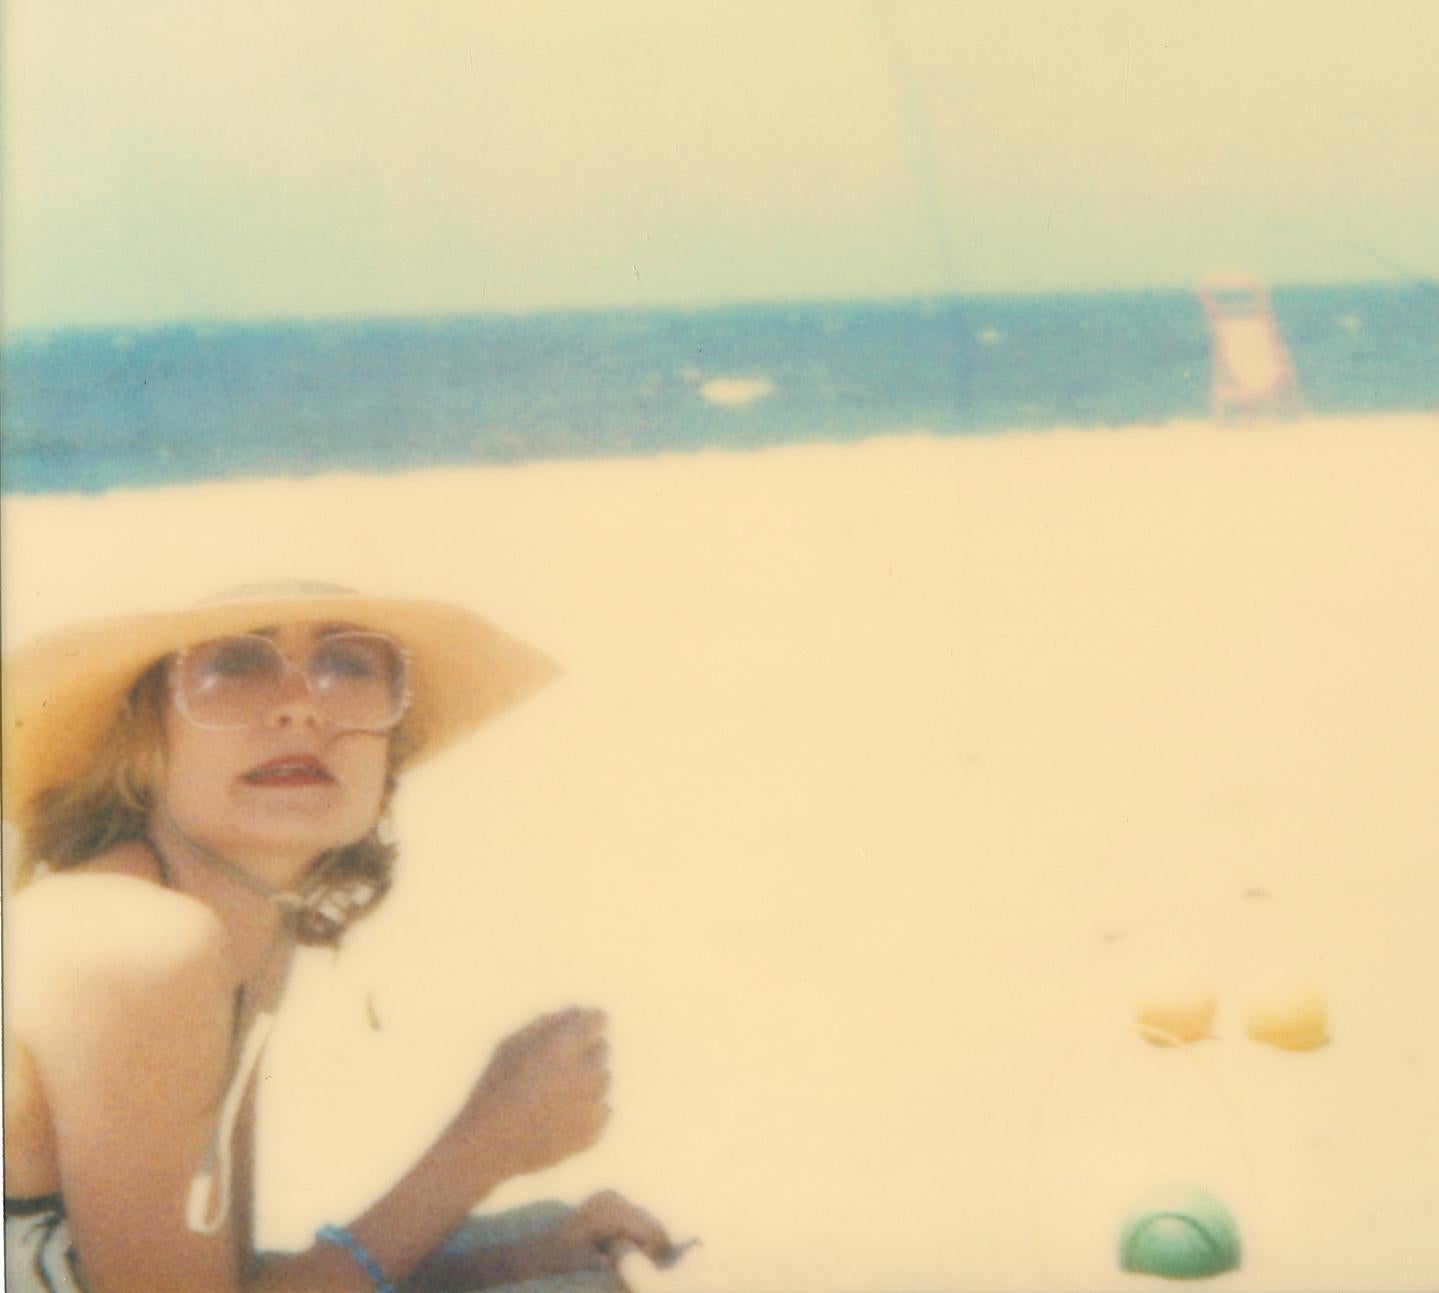 Untitled (Beachshoot) - analog, Polaroid, hand-print, vintage - Contemporary Photograph by Stefanie Schneider